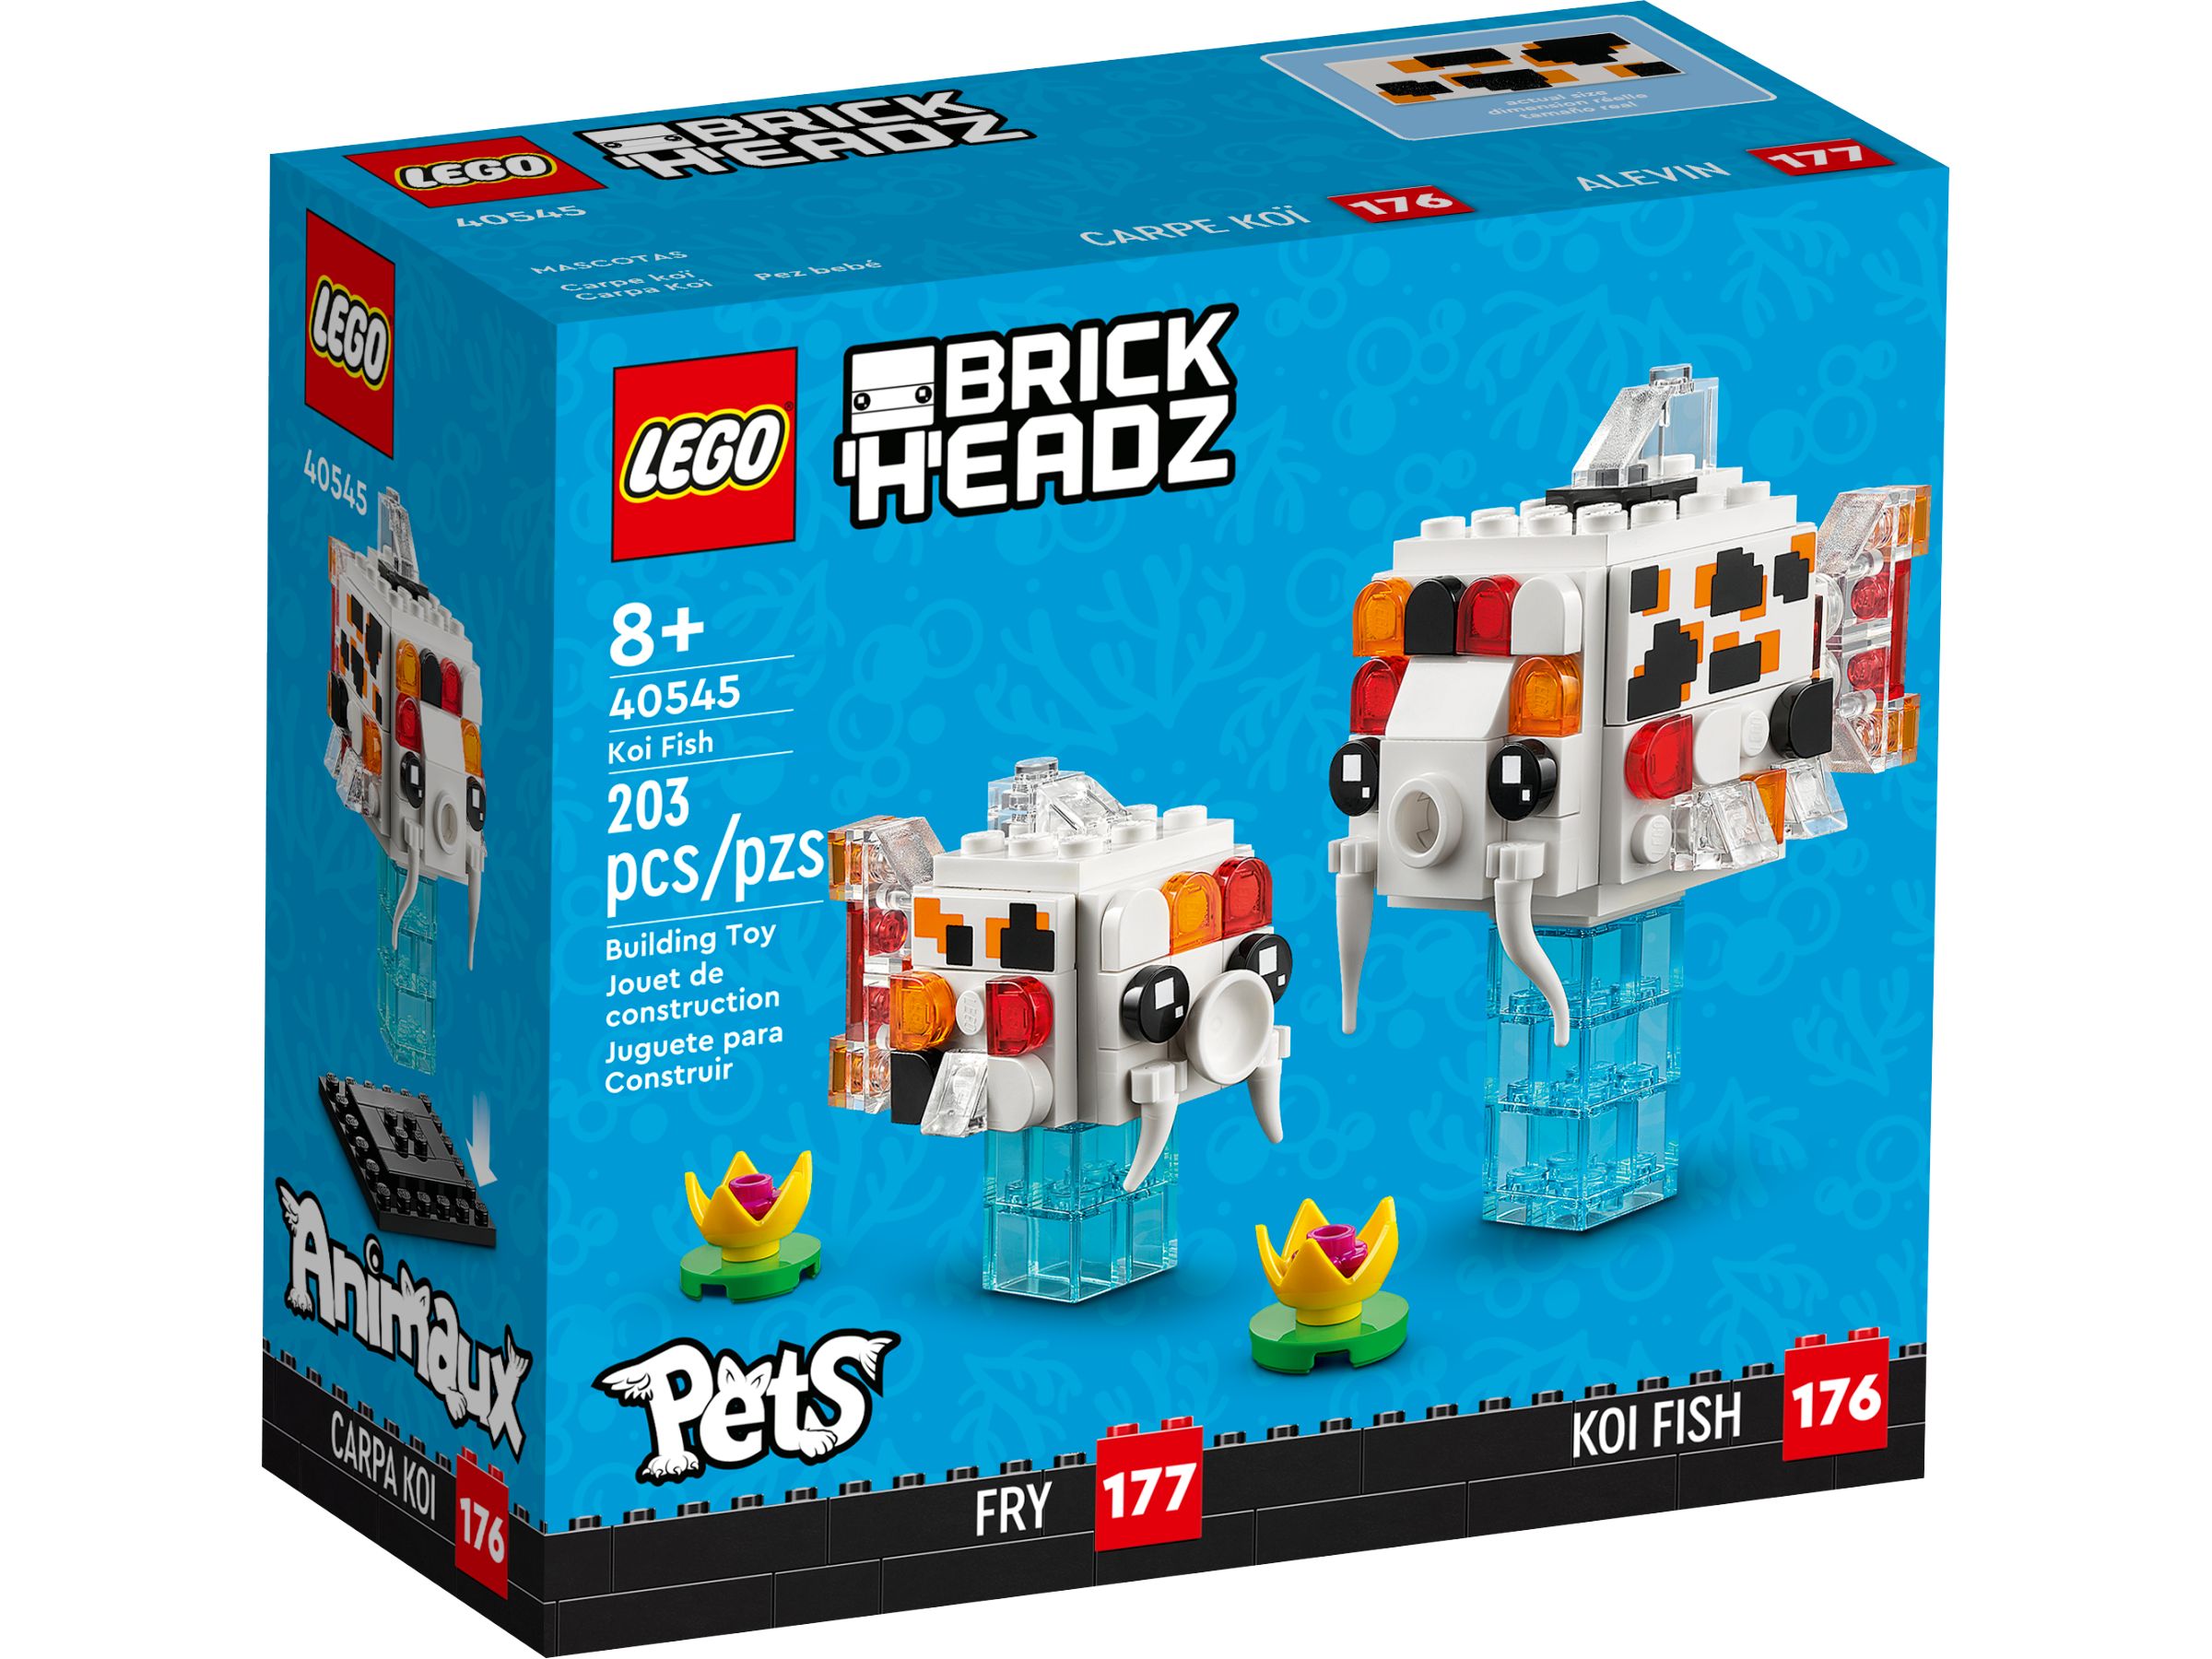 LEGO BrickHeadz 40545 Koi LEGO_40545_alt1.jpg